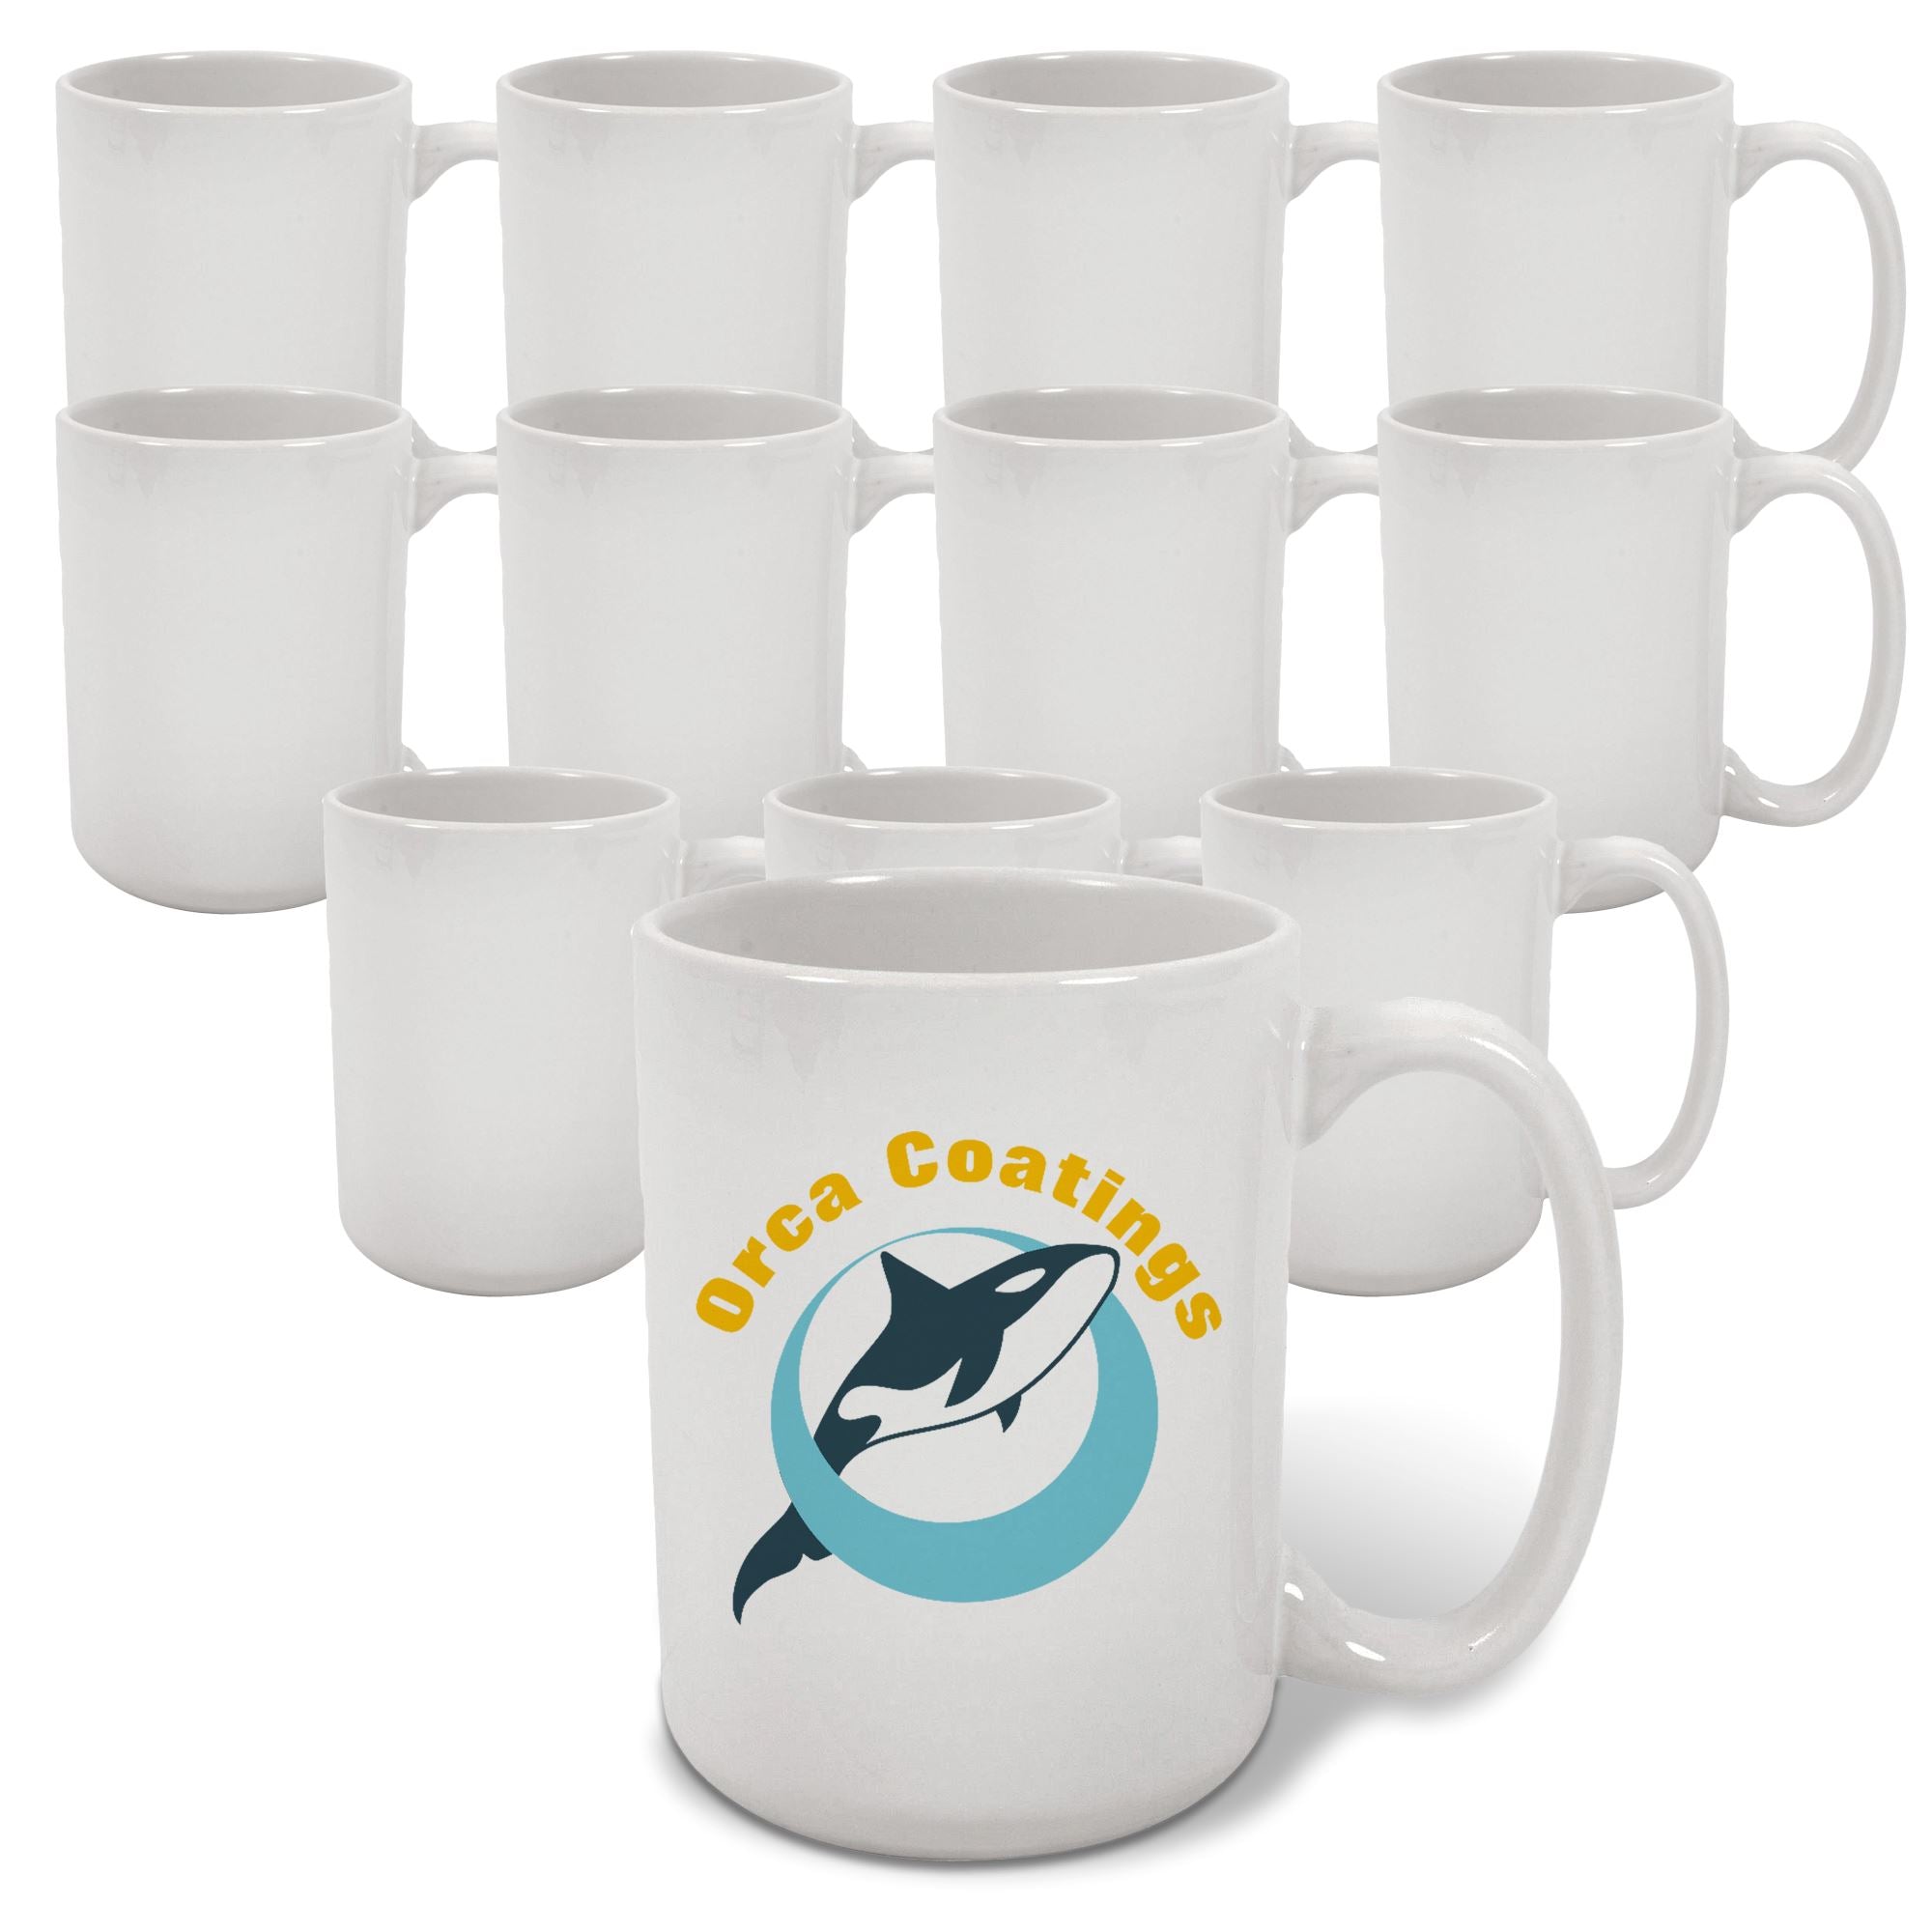 TANGLONG 15 oz Sublimation Mugs Blank Cups Coffee Mugs